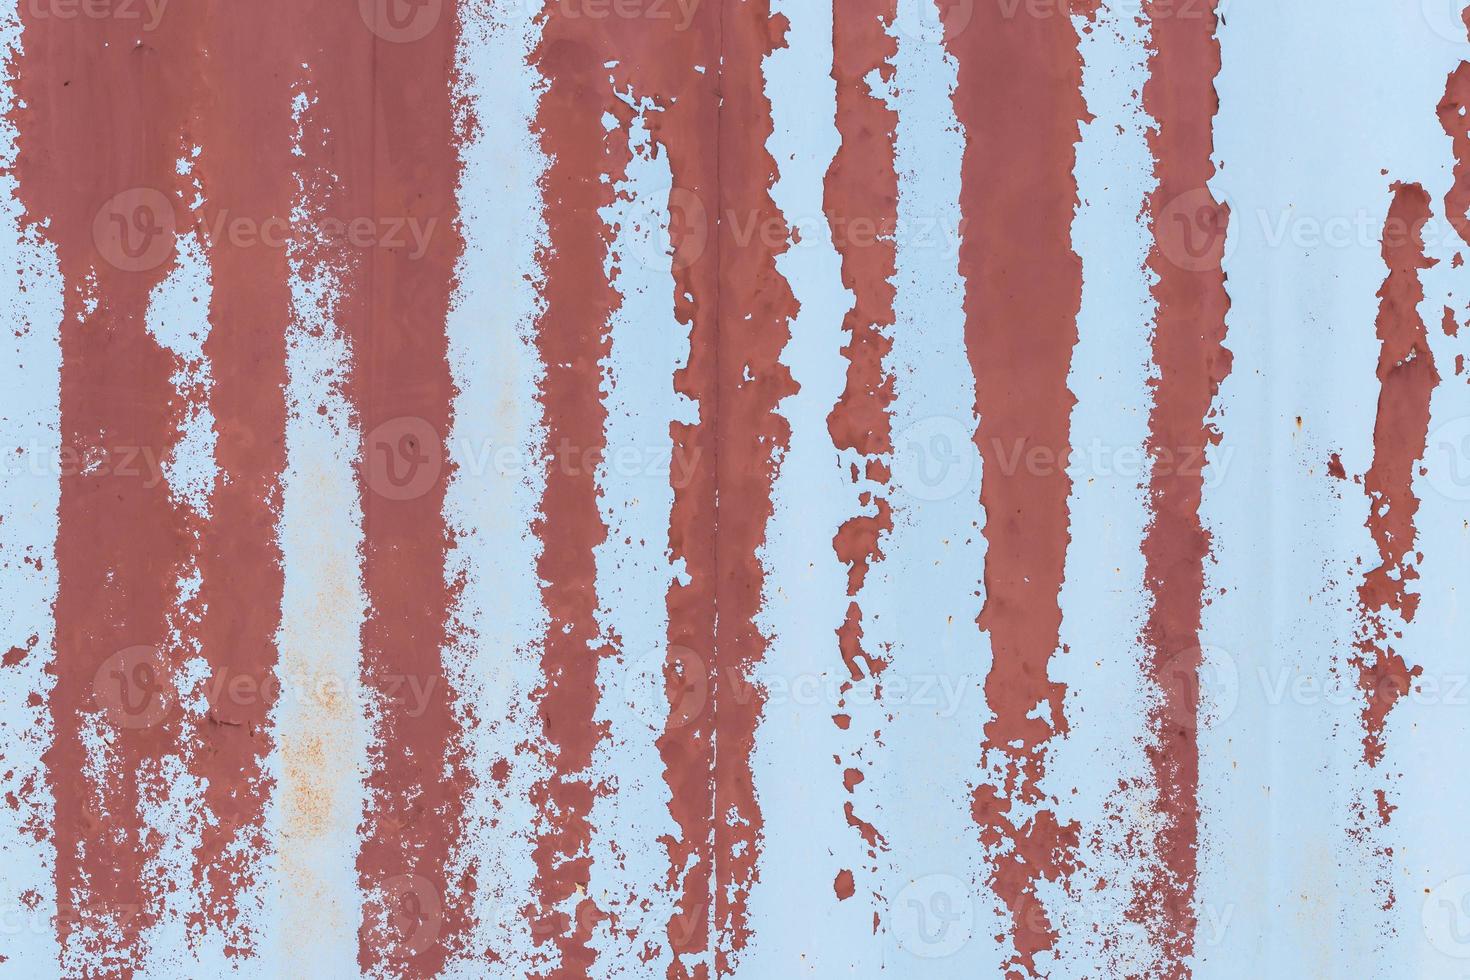 Fondo de pintura descascarada de pared oxidada foto